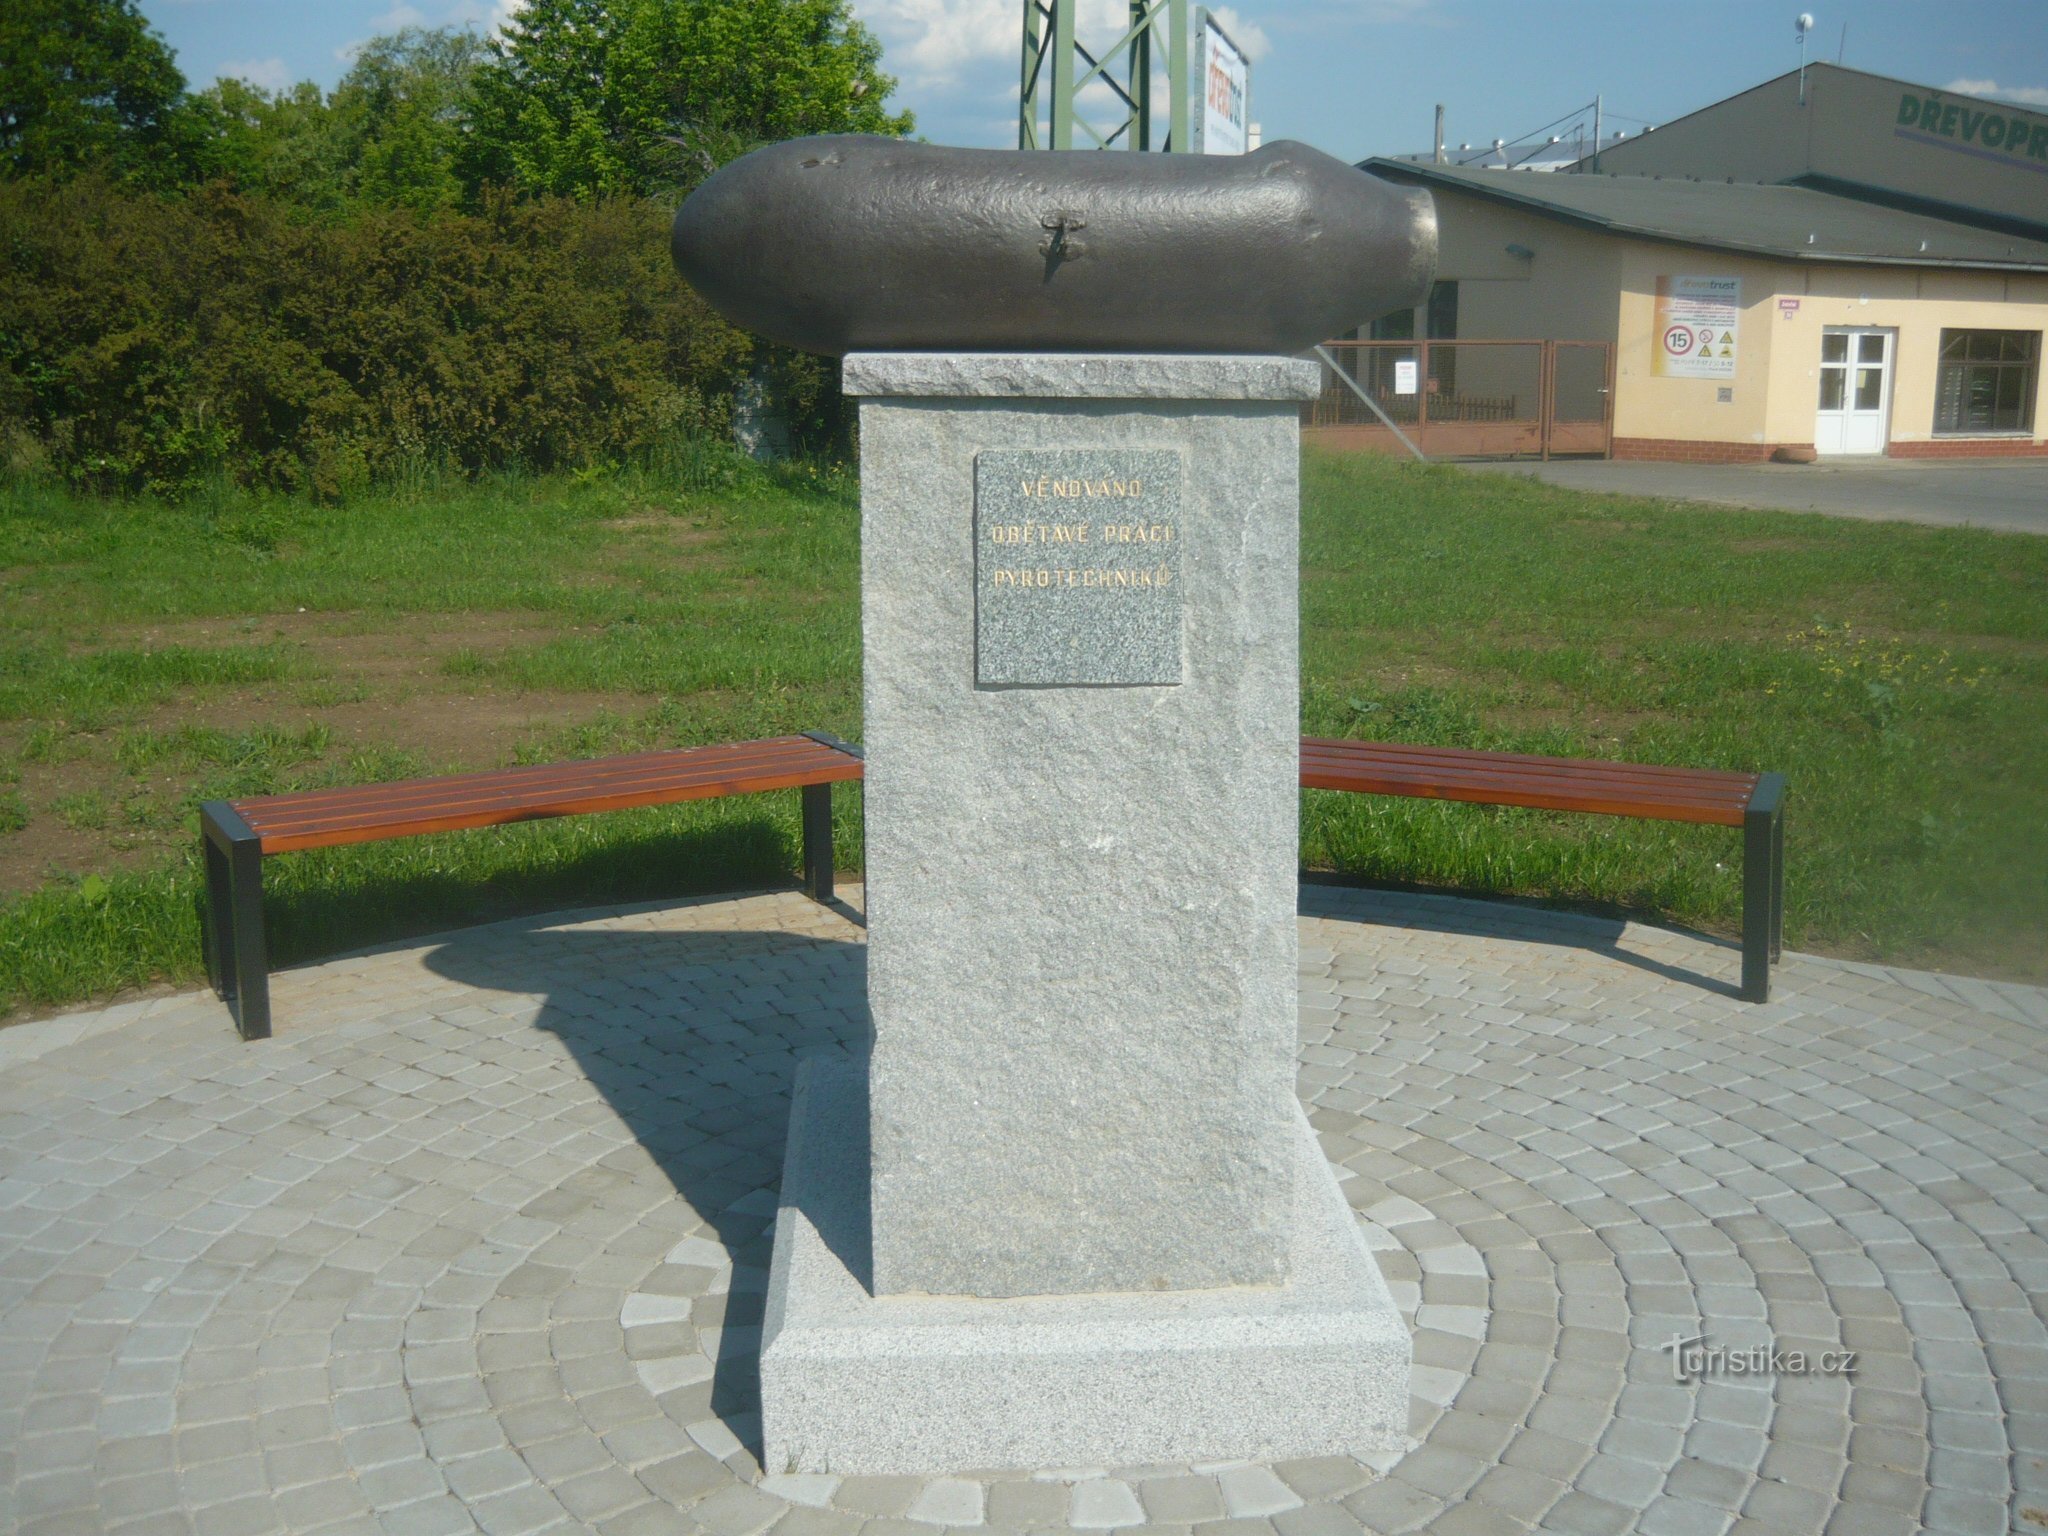 Mémorial du bombardement de Pilsen 17.4. 1945